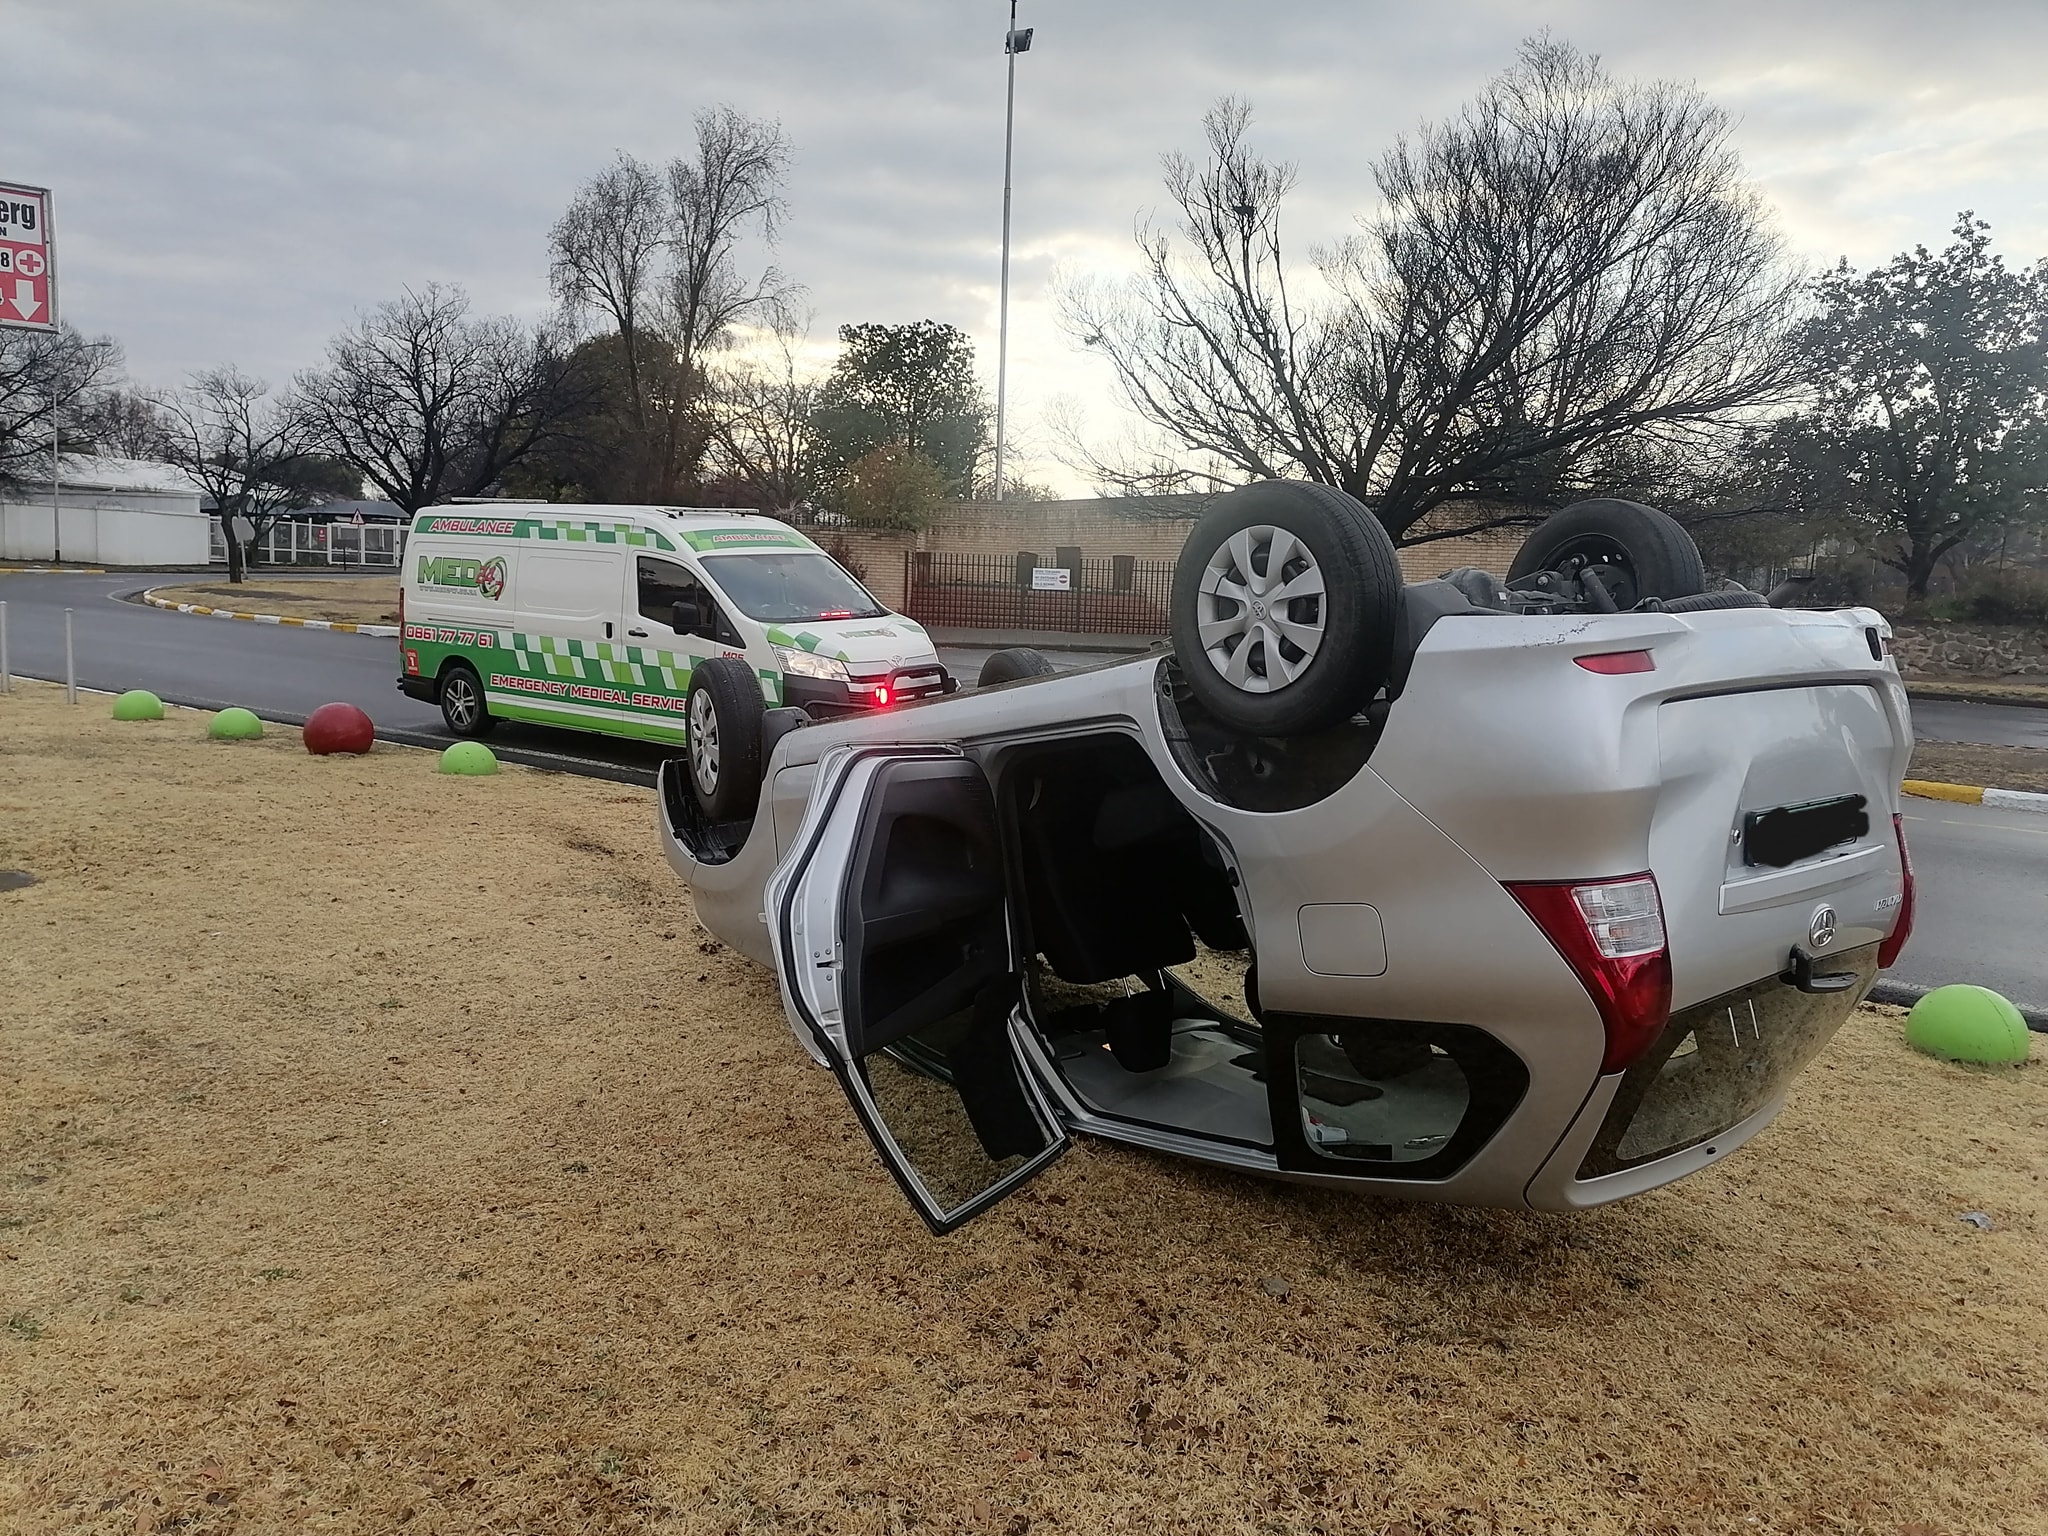 Fortunate escape from injury in a vehicle rollover in Dan Pienaar, Bloemfontein